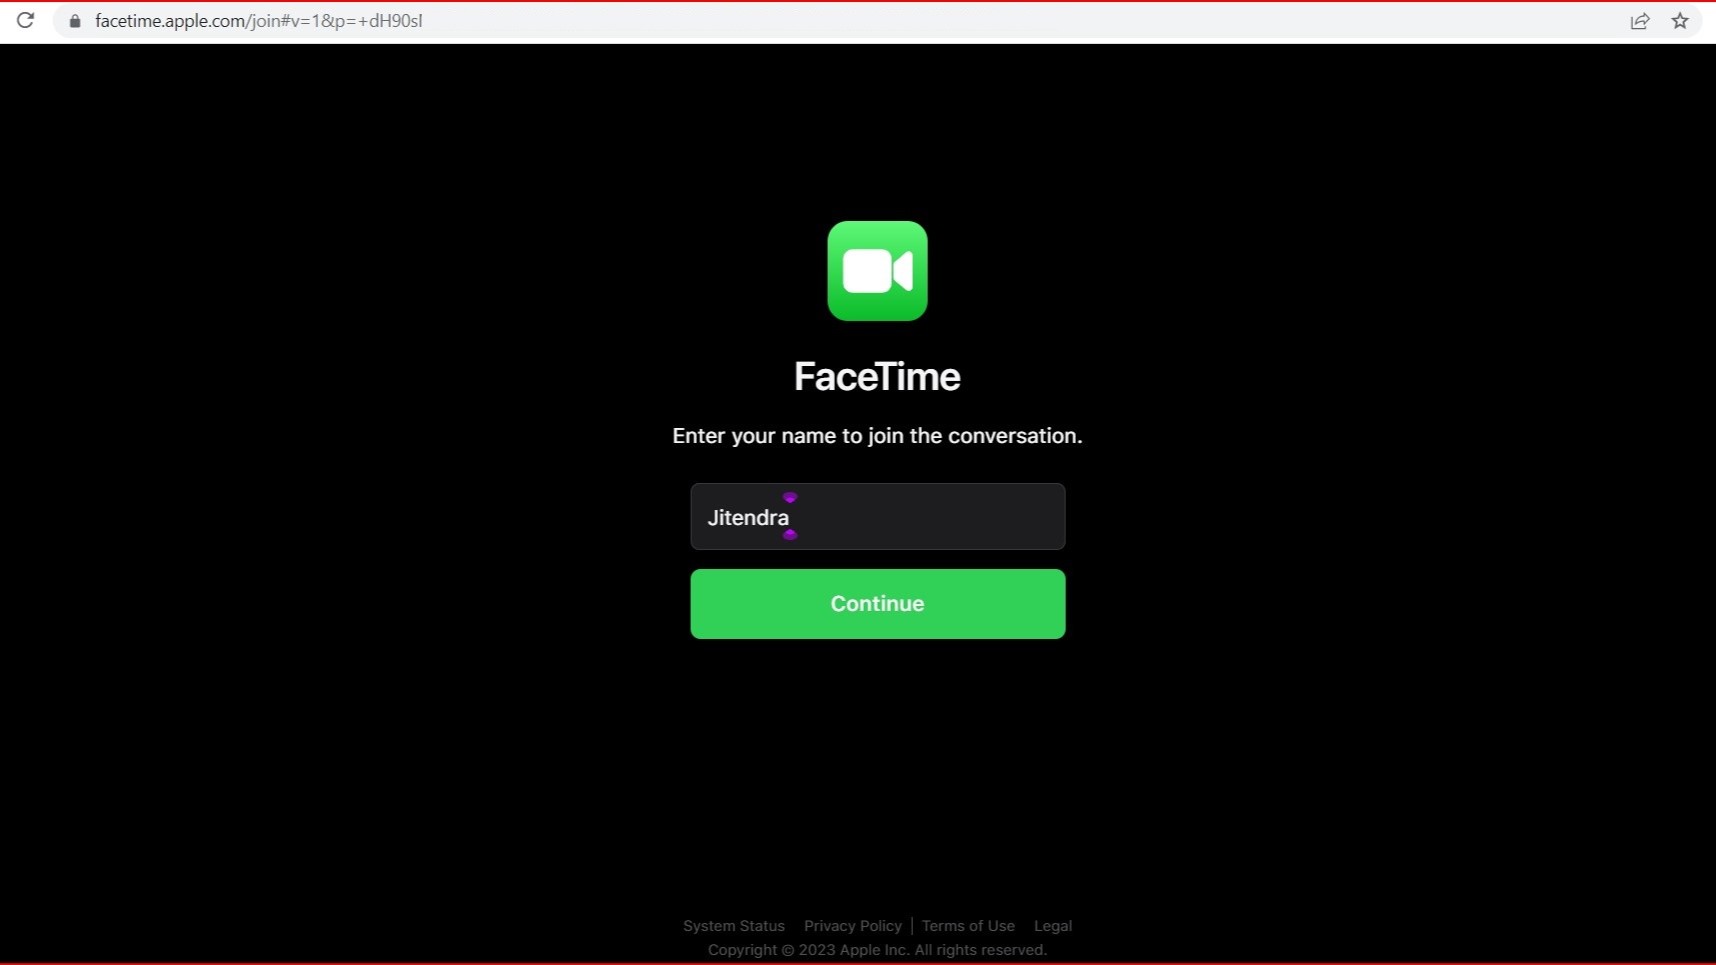 Windows PC'de Facetime Call'a katılıyor